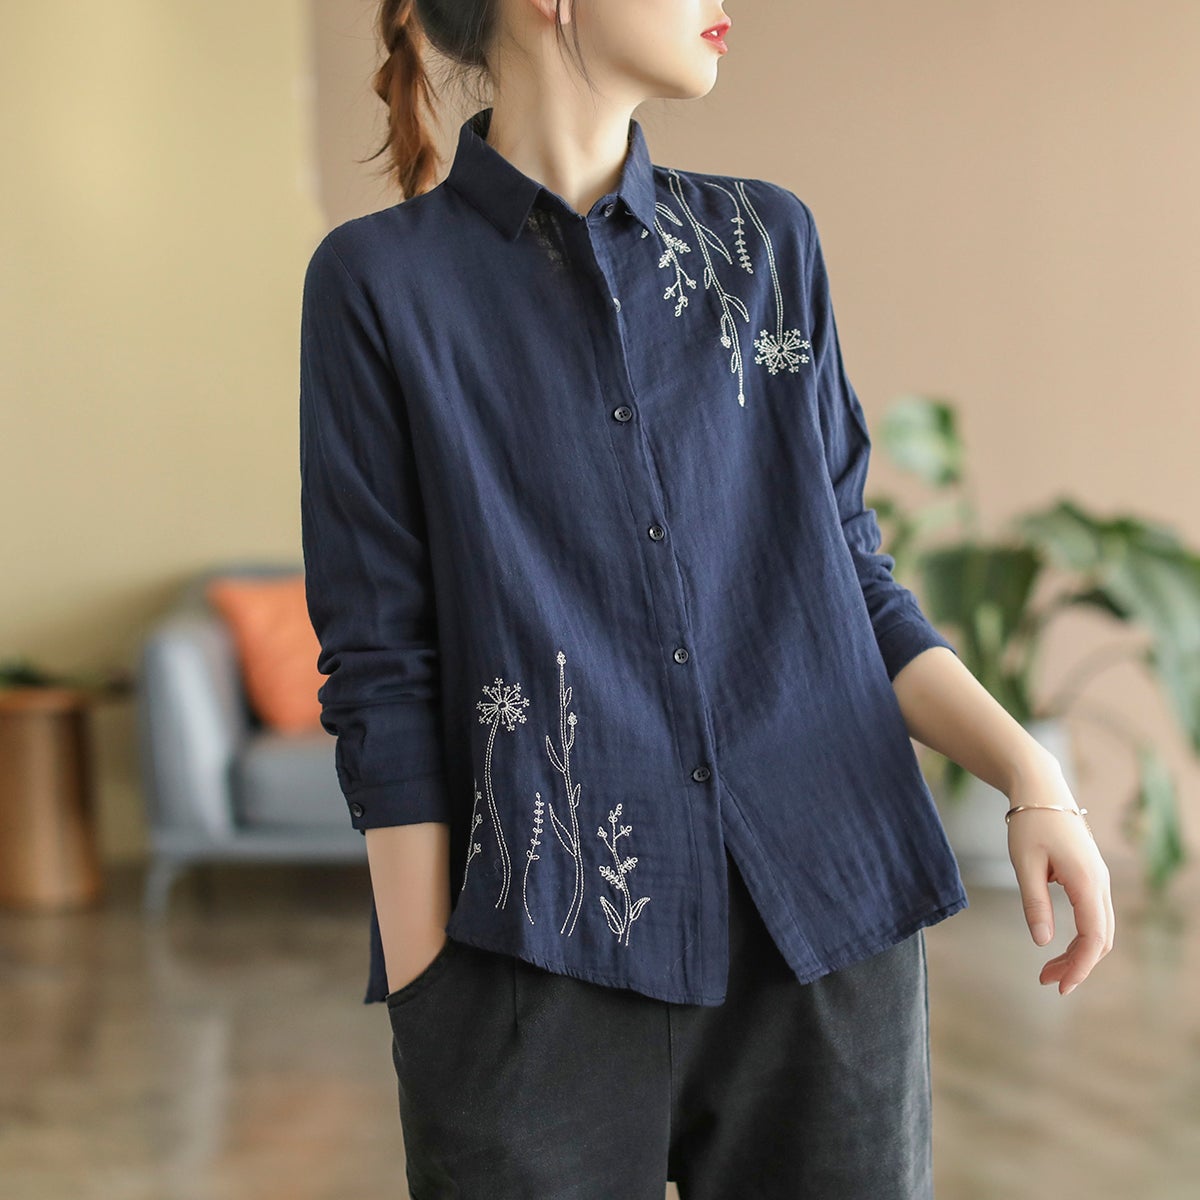 Women Vintage Floral Embroidery Cotton Long Sleeve Blouse Dec 2021 New Arrival One Size Blue 